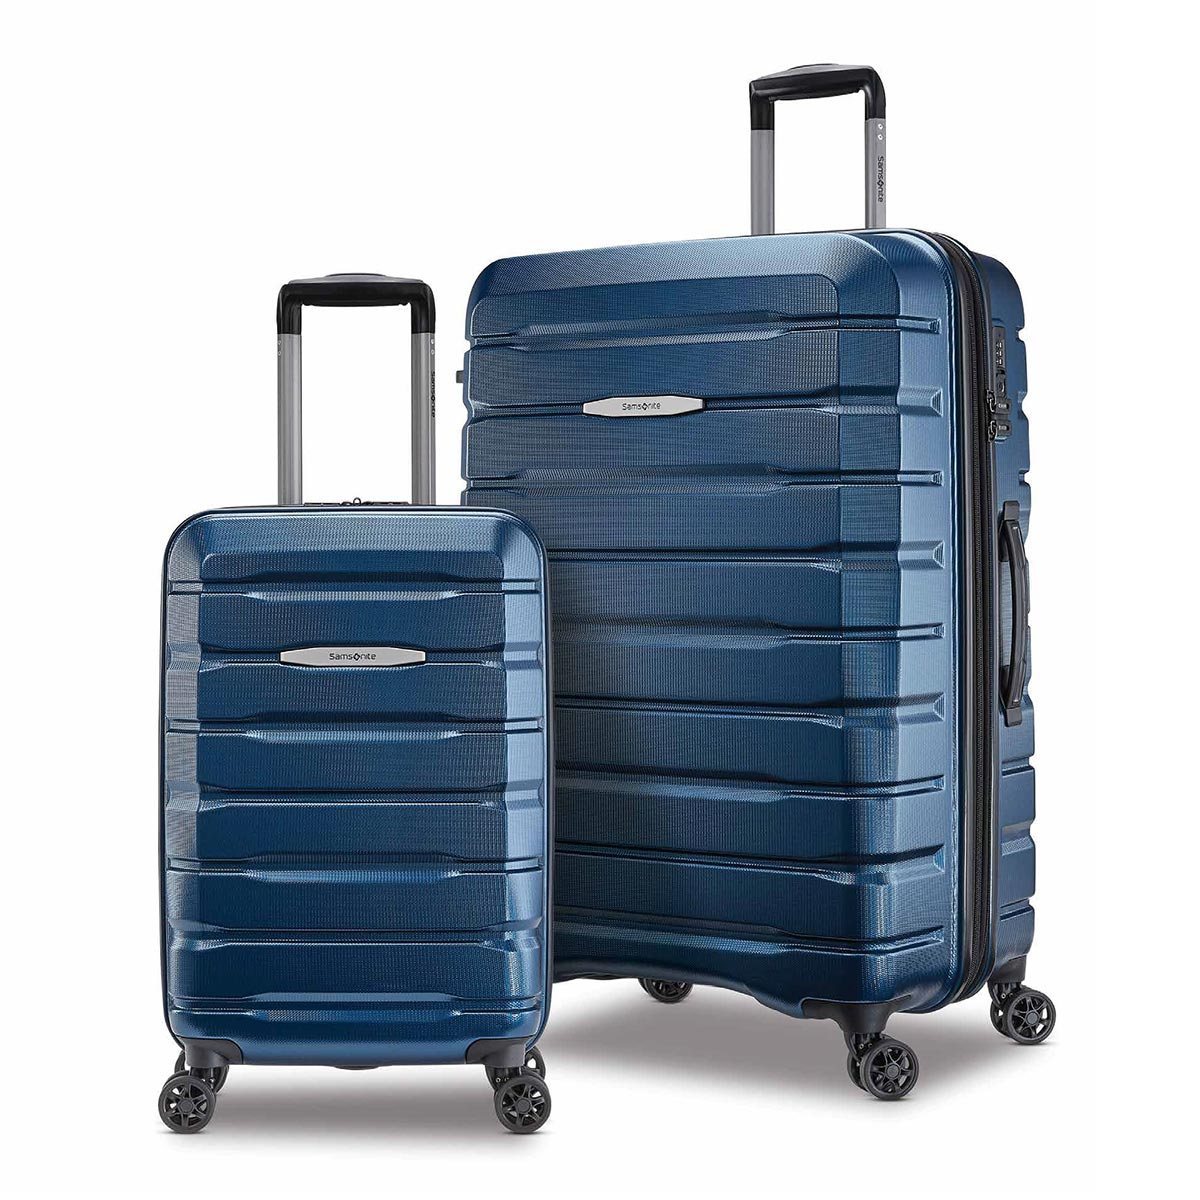 Samsonite Luggage Set 硬殼行李箱27吋 吋含輪尺寸為28吋 21吋 Costco 好市多線上購物